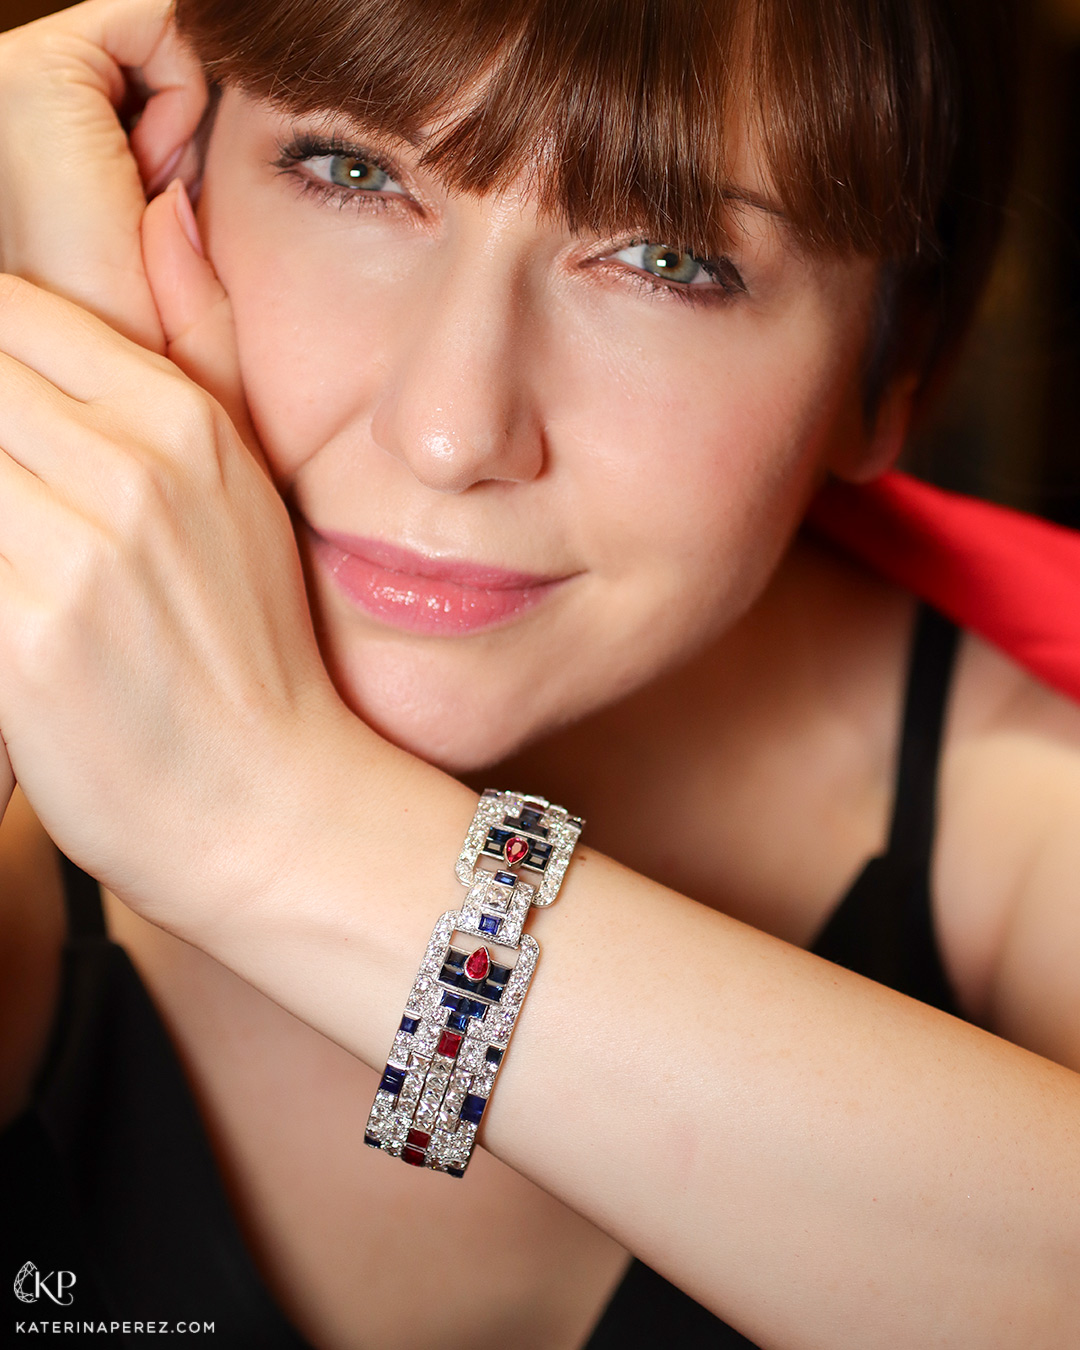 Katerina Perez wearing Ronald Abram art deco bracelet with rubies, sapphires and diamonds